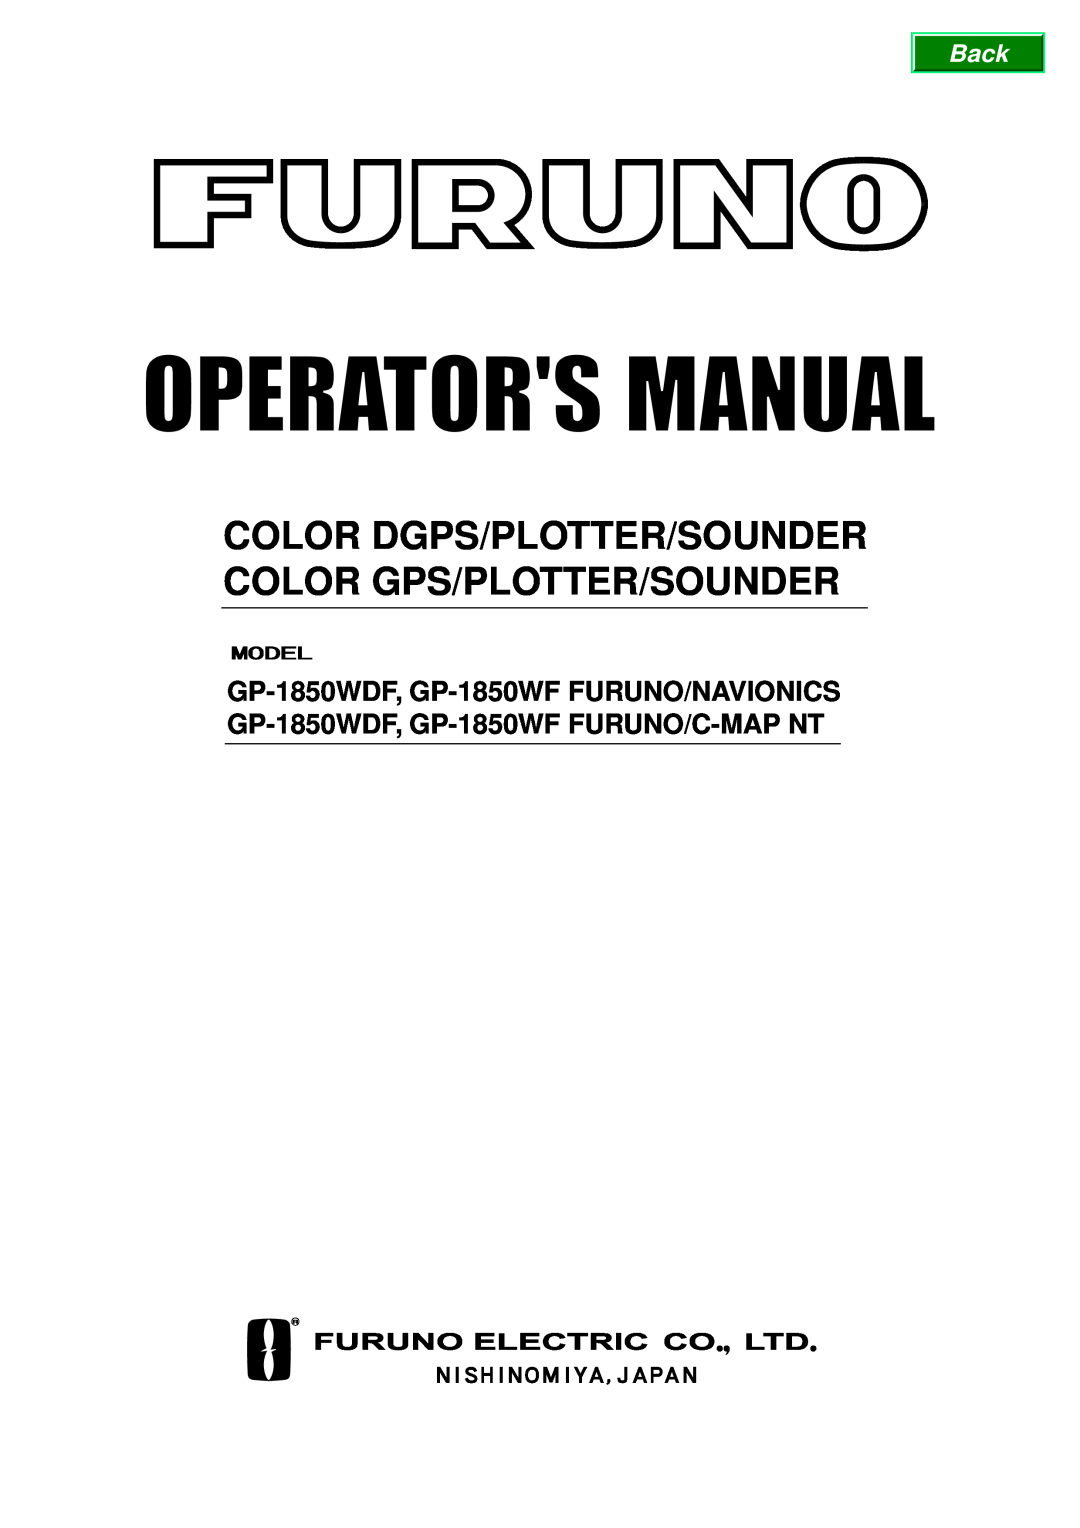 Furuno GP-1850WF, GP-1850WDF manual Color Dgps/Plotter/Sounder Color Gps/Plotter/Sounder, Back 